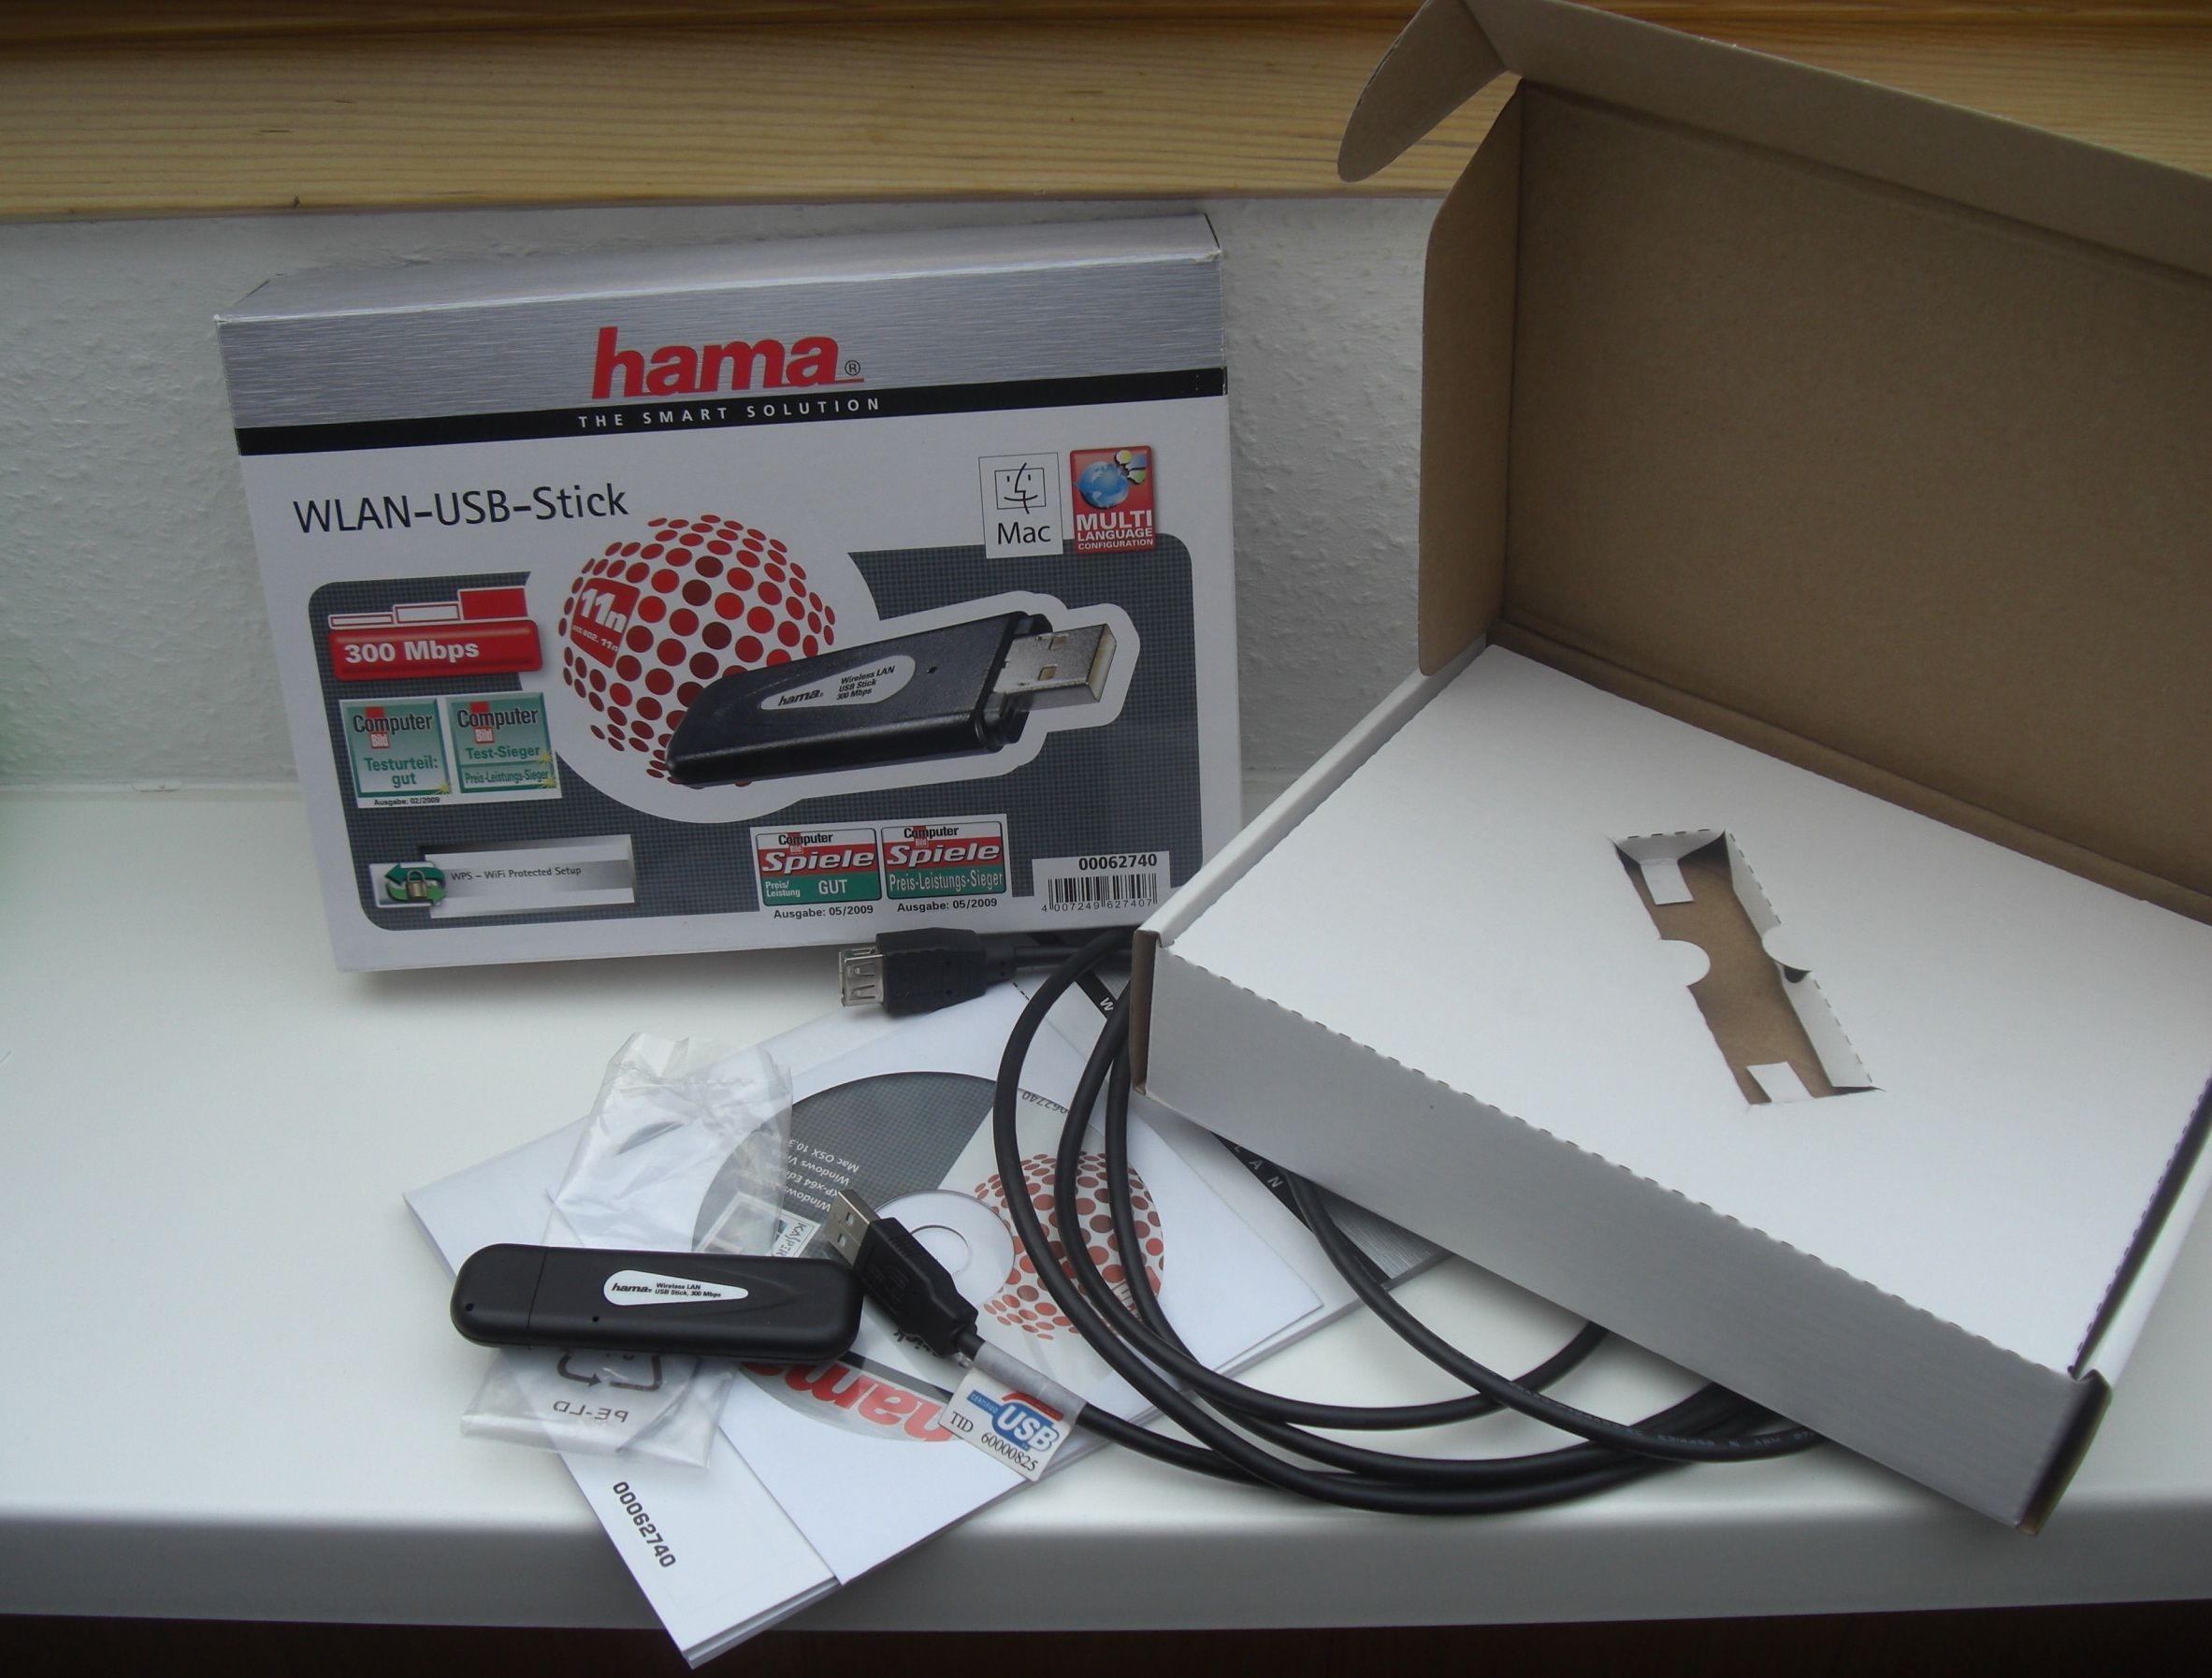 Hama WLAN USB 2.0 Stick 300 Mbps, für Samsung TVs geeignet 3 M USB